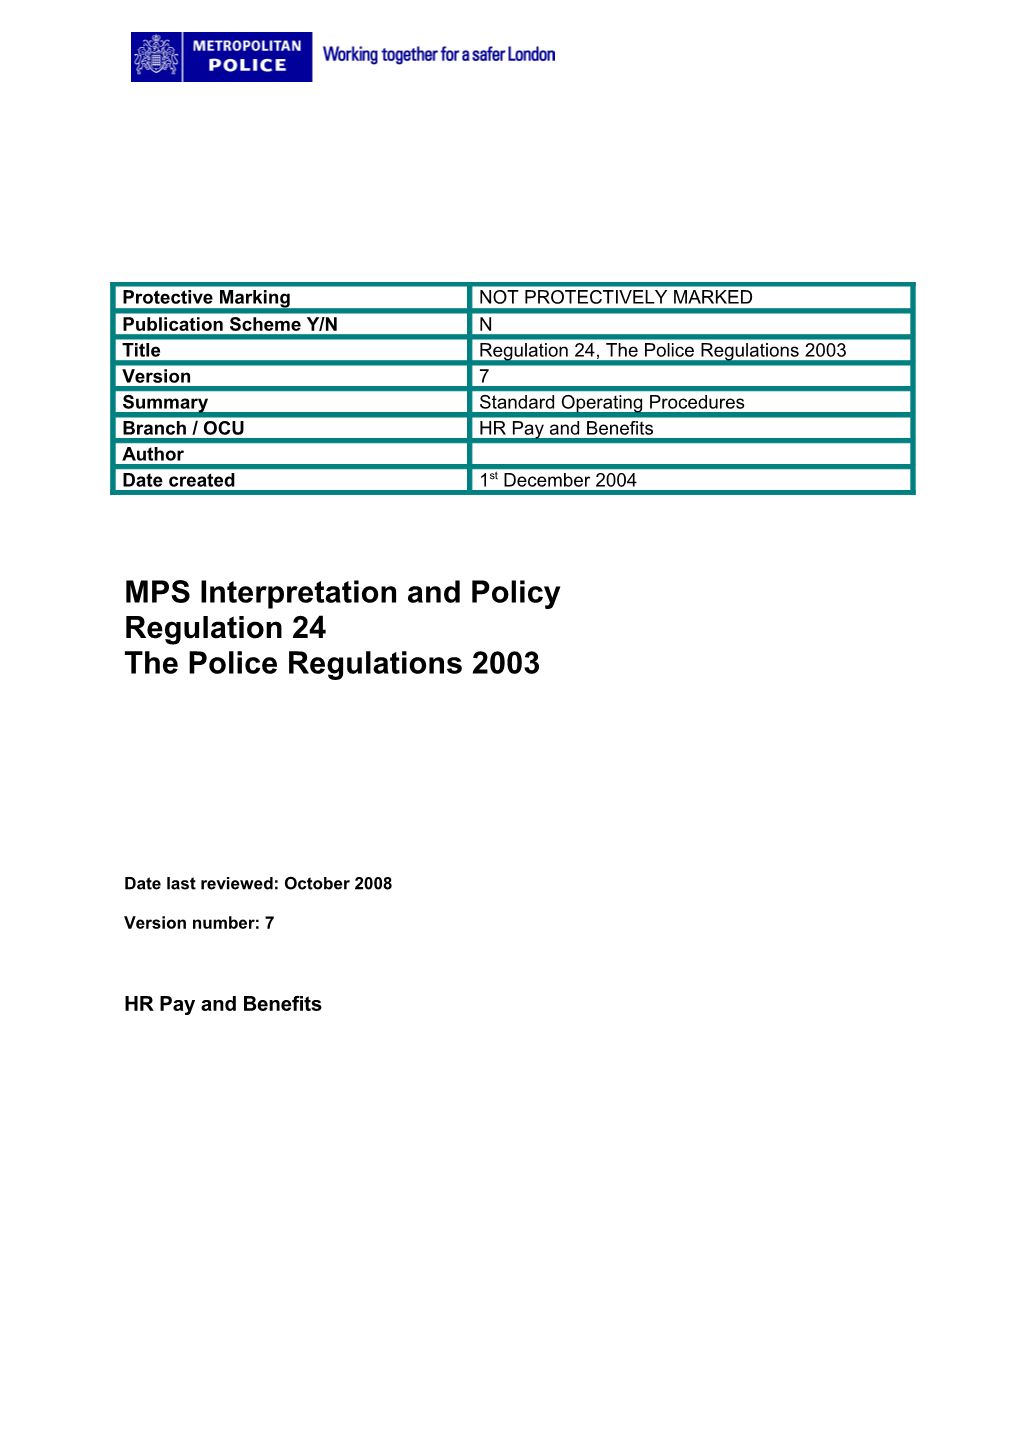 MPS Interpretation and Policy